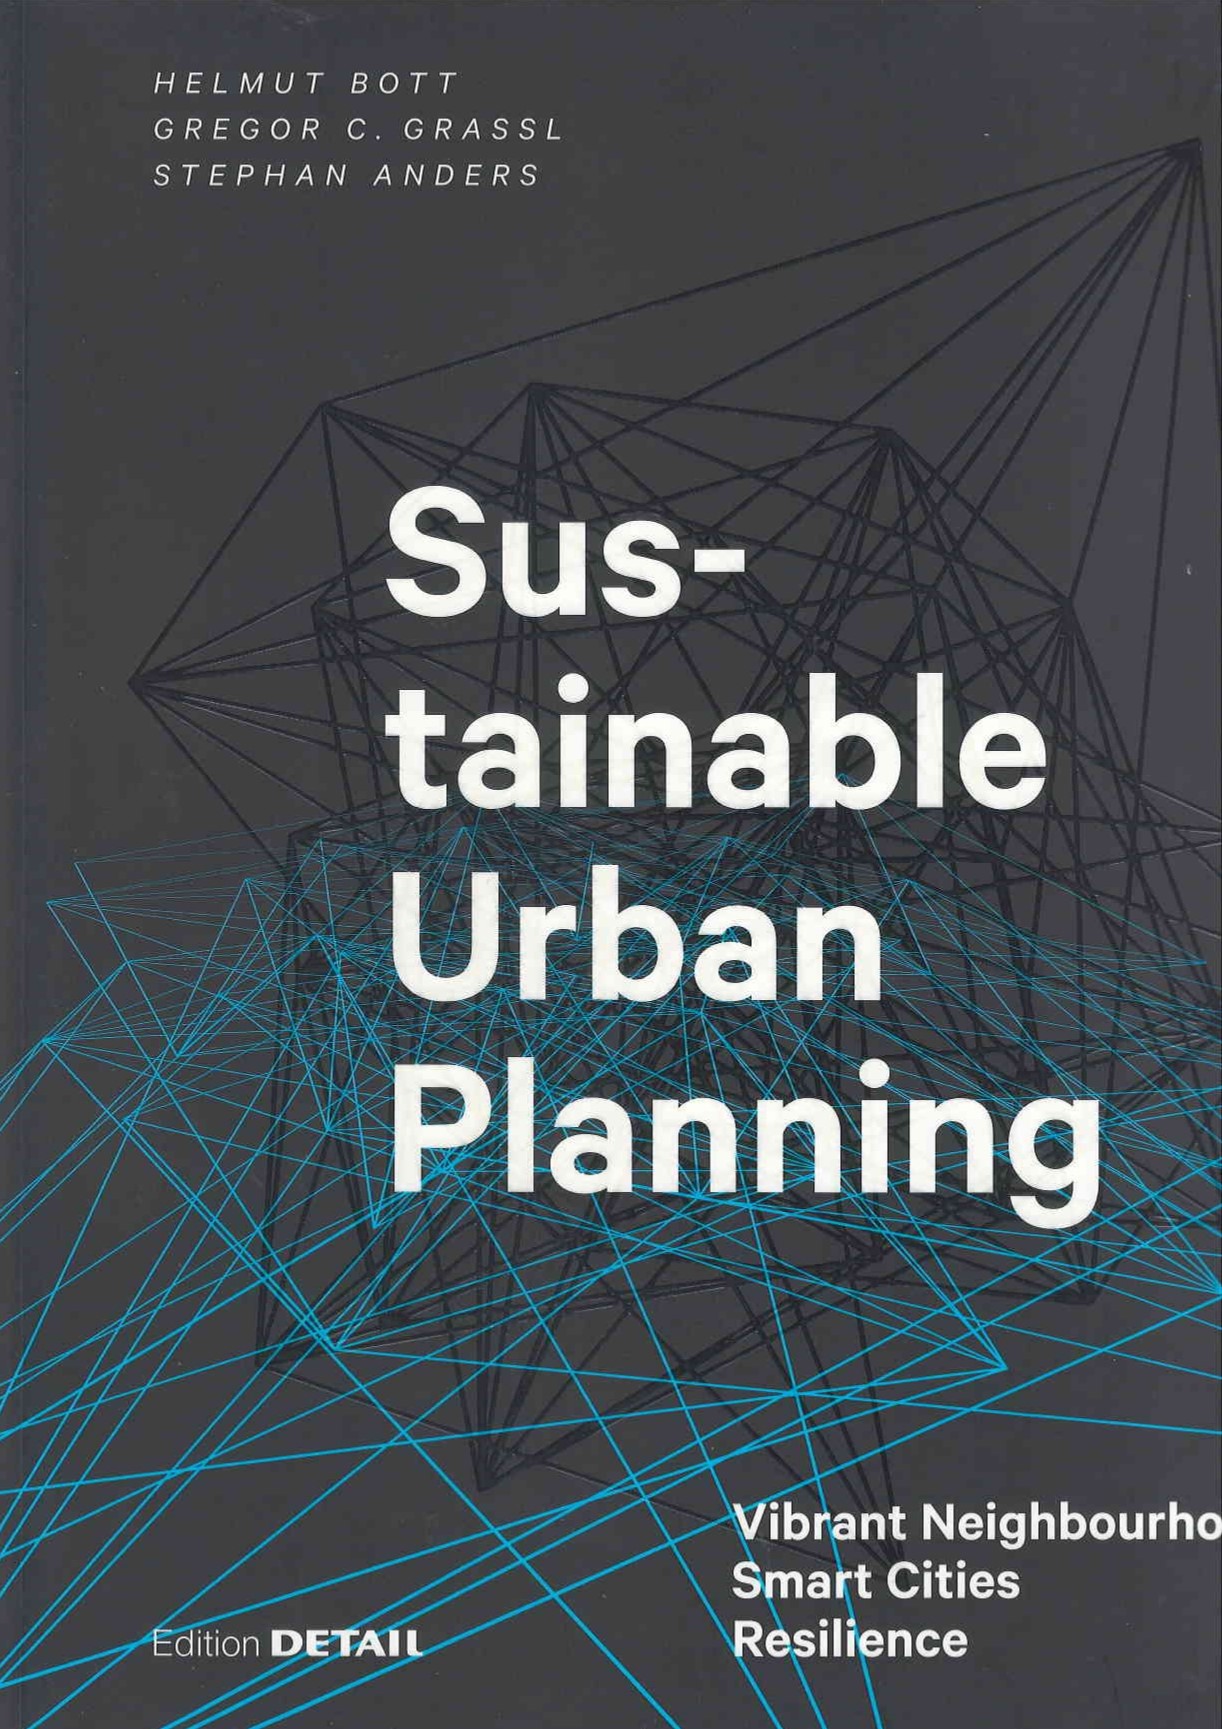 Sustainable urban planning : vibrant neighbourhoods, smart cities, resilience